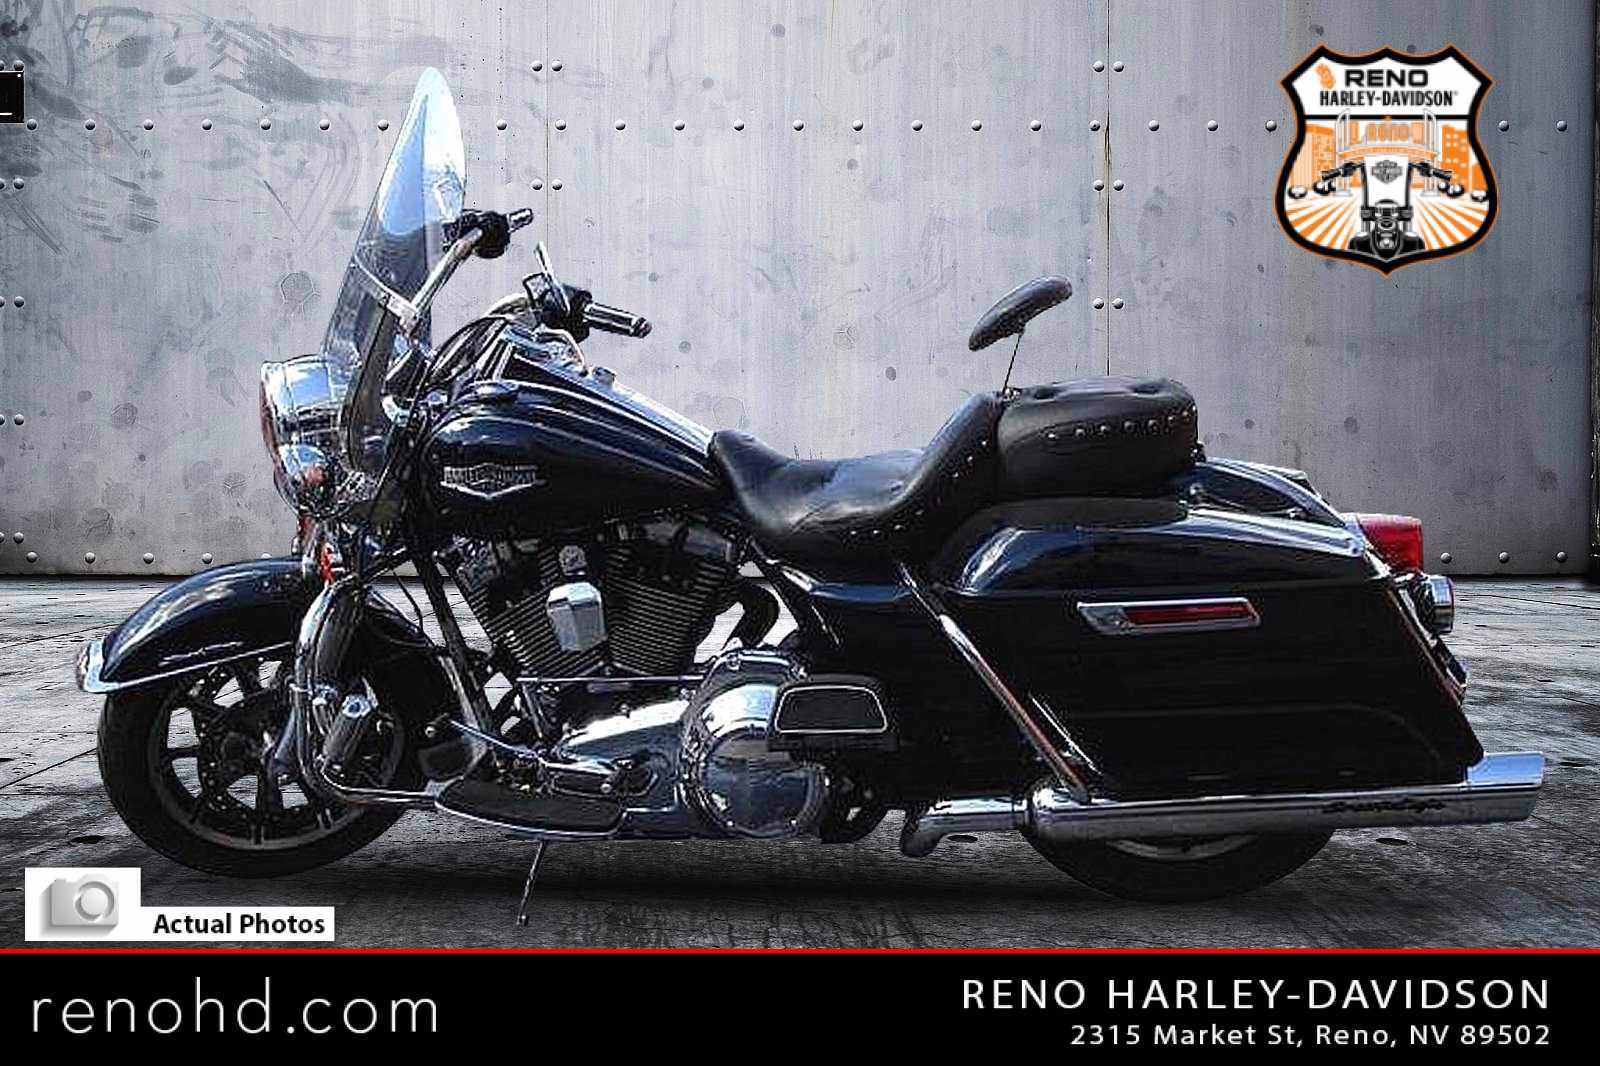 Harley Davidson Motorcycles For Sale Near Reno Nv 122 Bikes Page 1 Chopperexchange